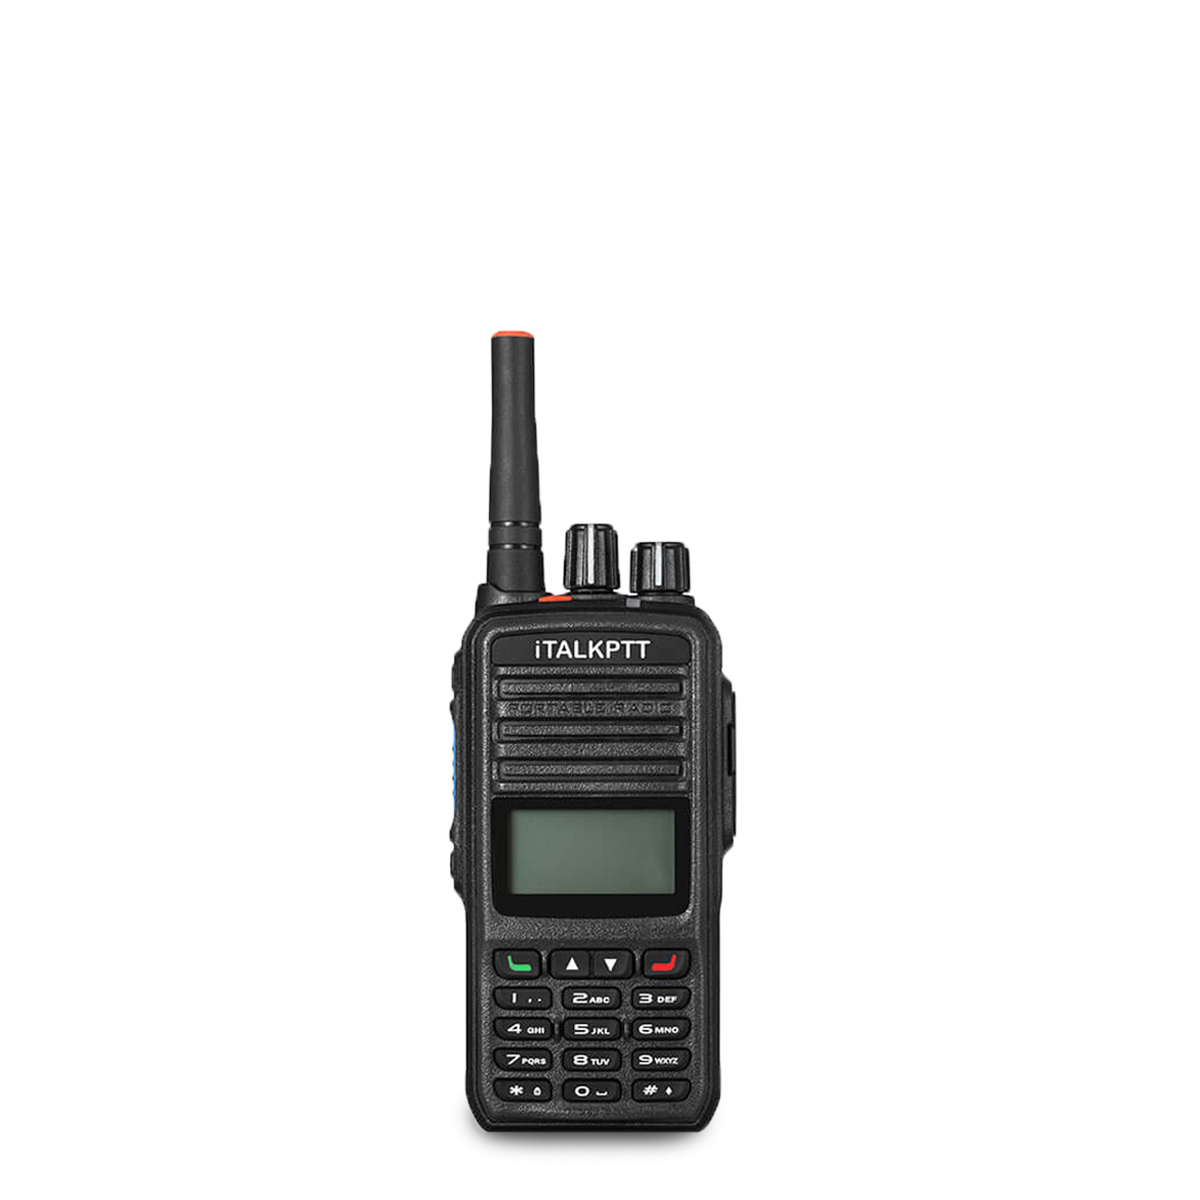 Radio Portátil PoC iTALK220 ITALKPTT EMEA GSM-GPRS-3G-4G